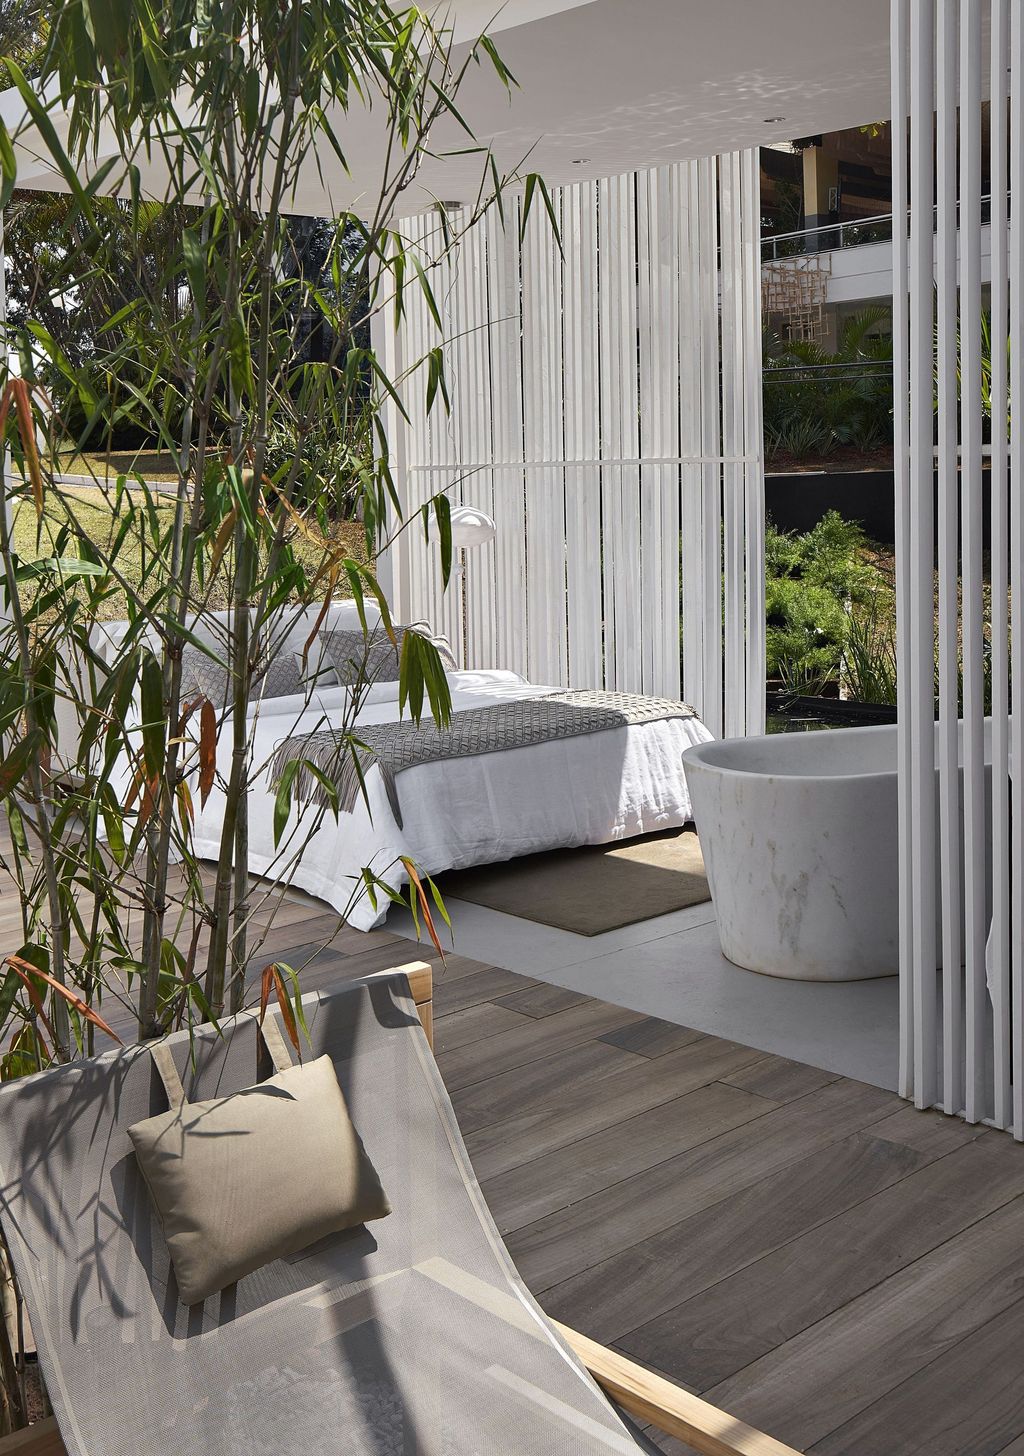 Acqua House with simplicity & functionality by Cristina Menezes Arquitetura